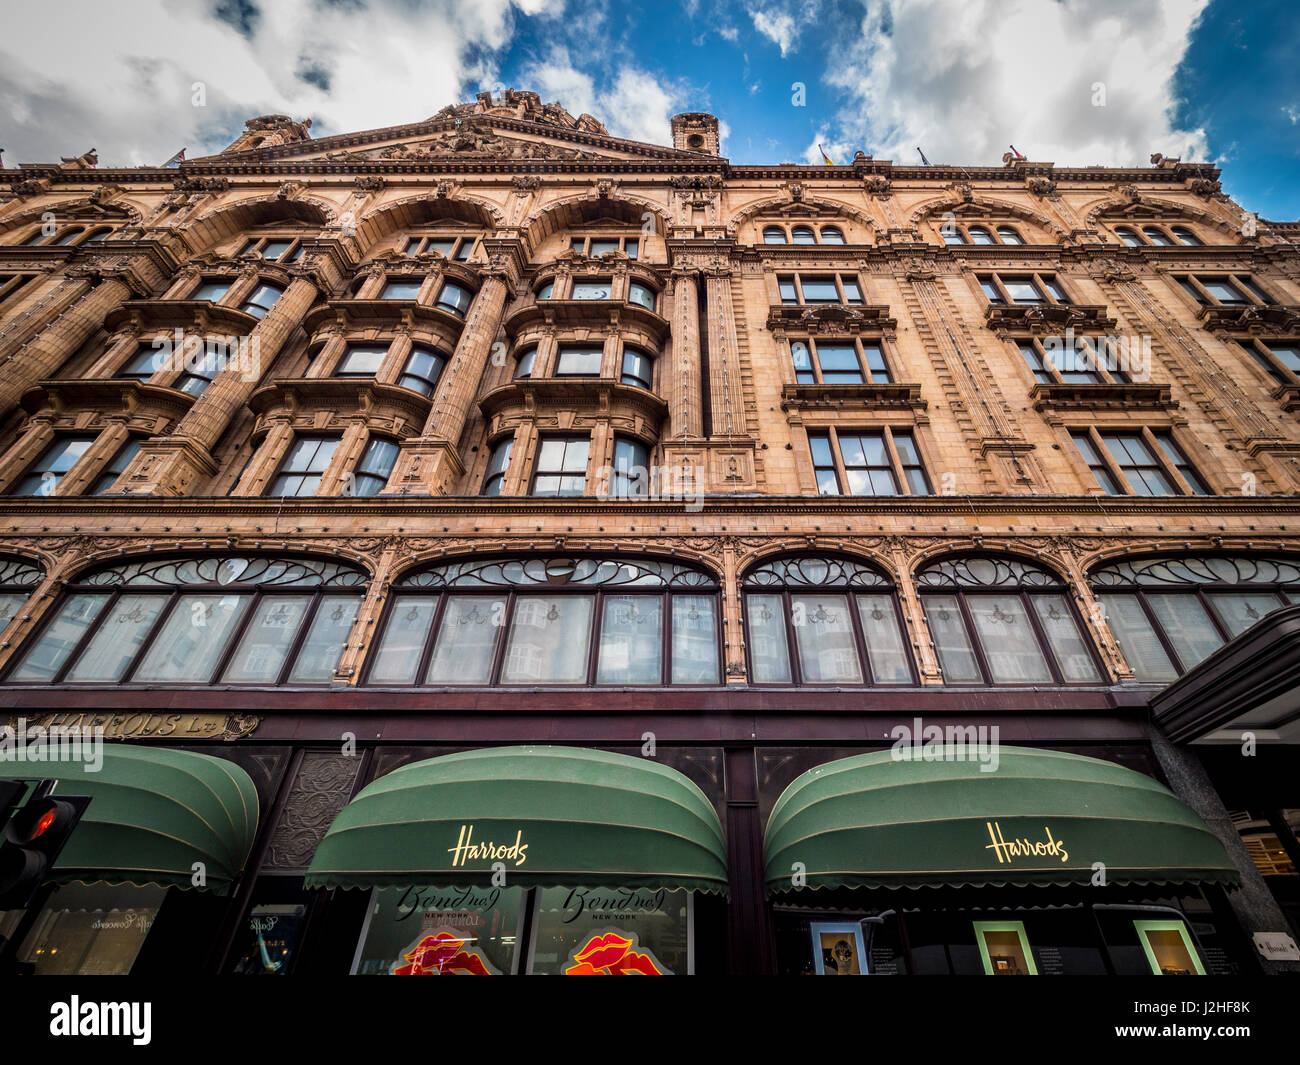 Exterior of Harrods luxury goods department store, Knightsbridge, London, UK. Stock Photo